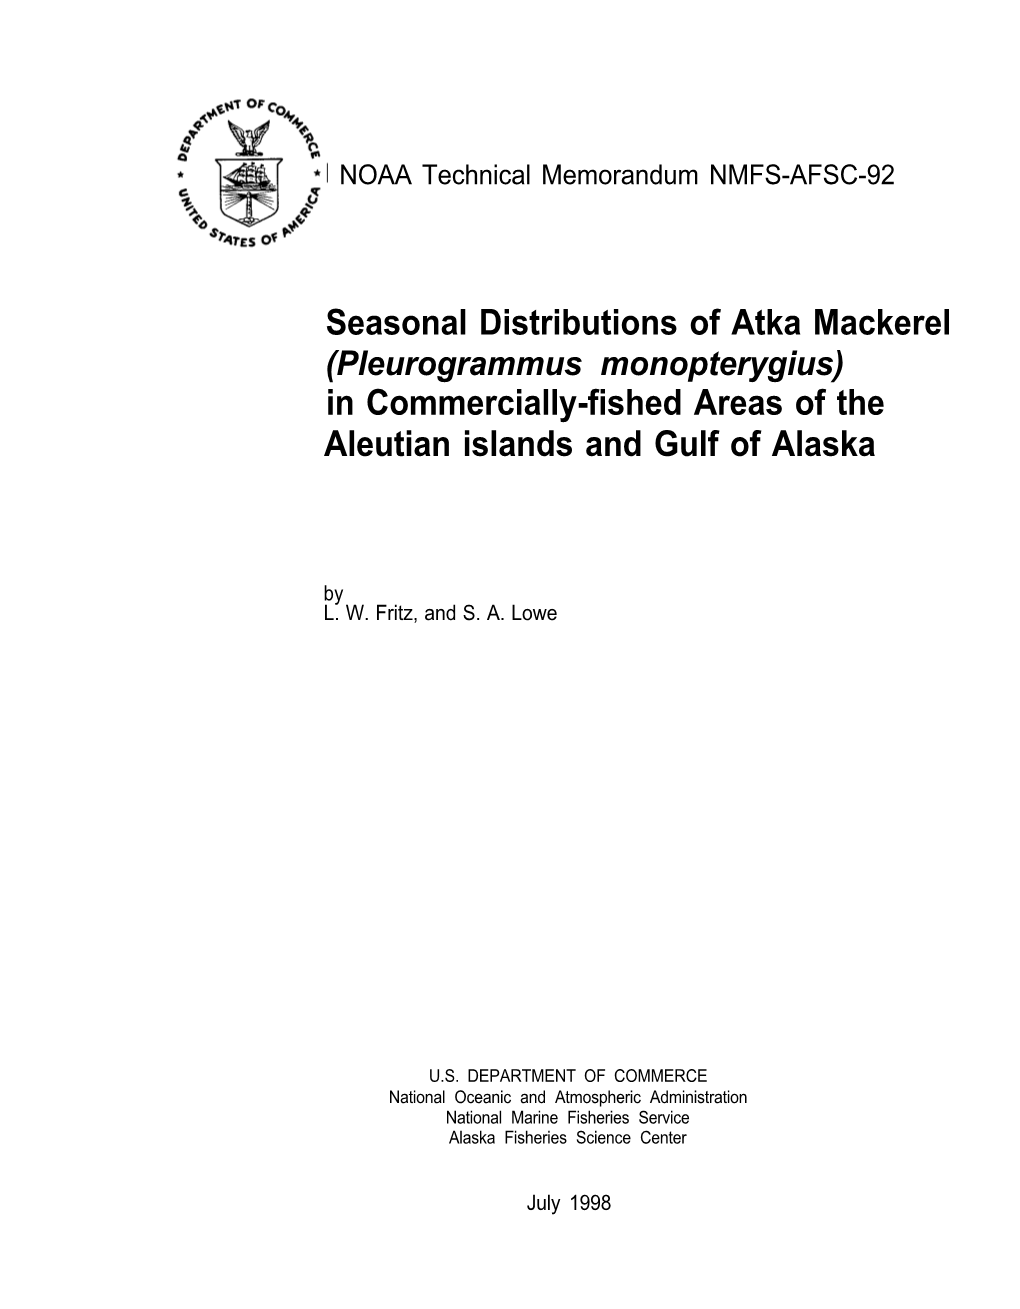 Seasonal Distributions of Atka Mackerel (Pleurogrammus Monopterygius) in Commercially-Fished Areas of the Aleutian Islands and Gulf of Alaska